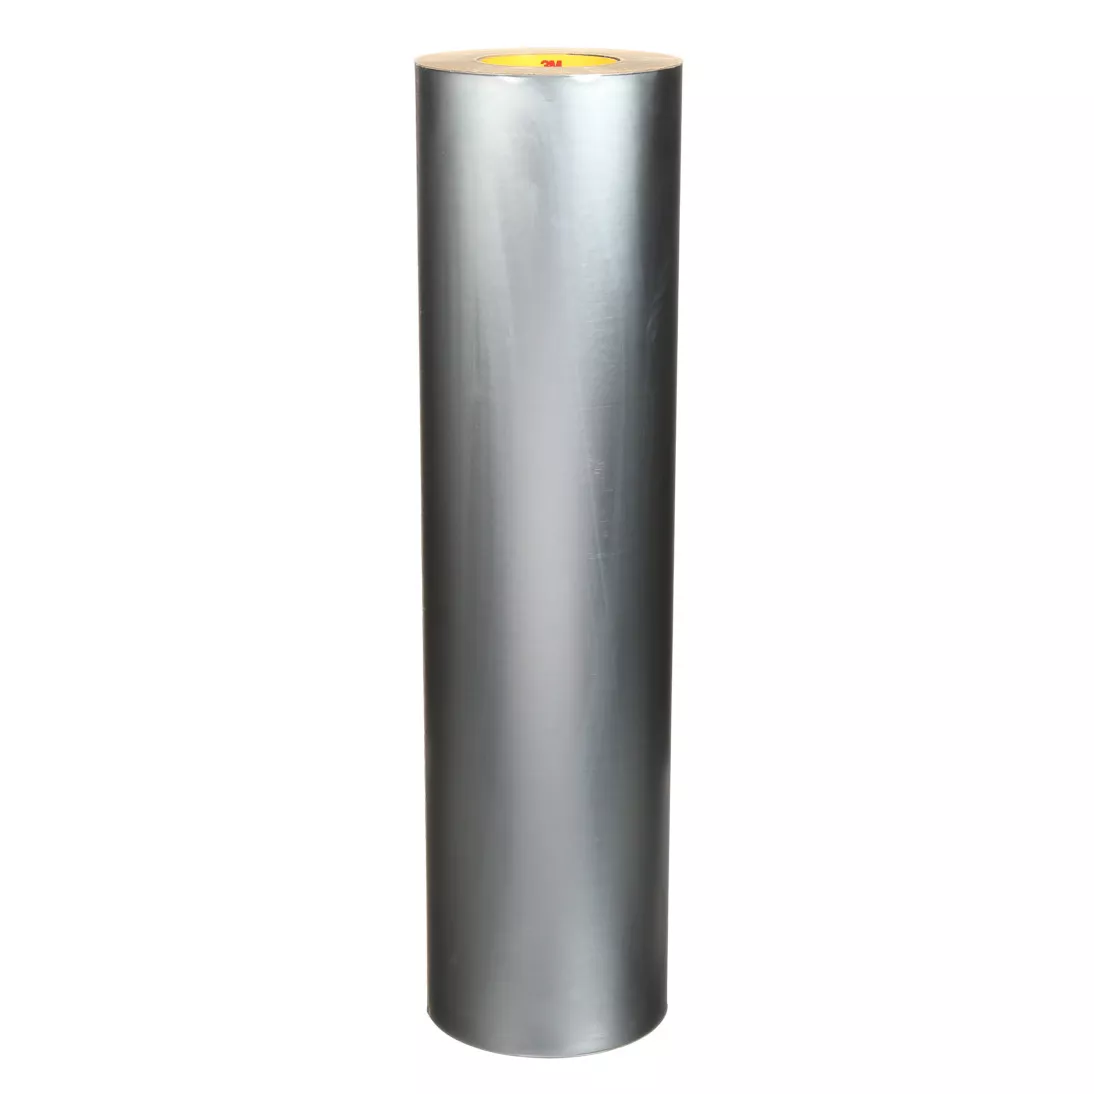 3M™ VentureClad™ Insulation Jacketing Tape 1577CW, Silver, 23 in x 50
yd, 1 roll per case